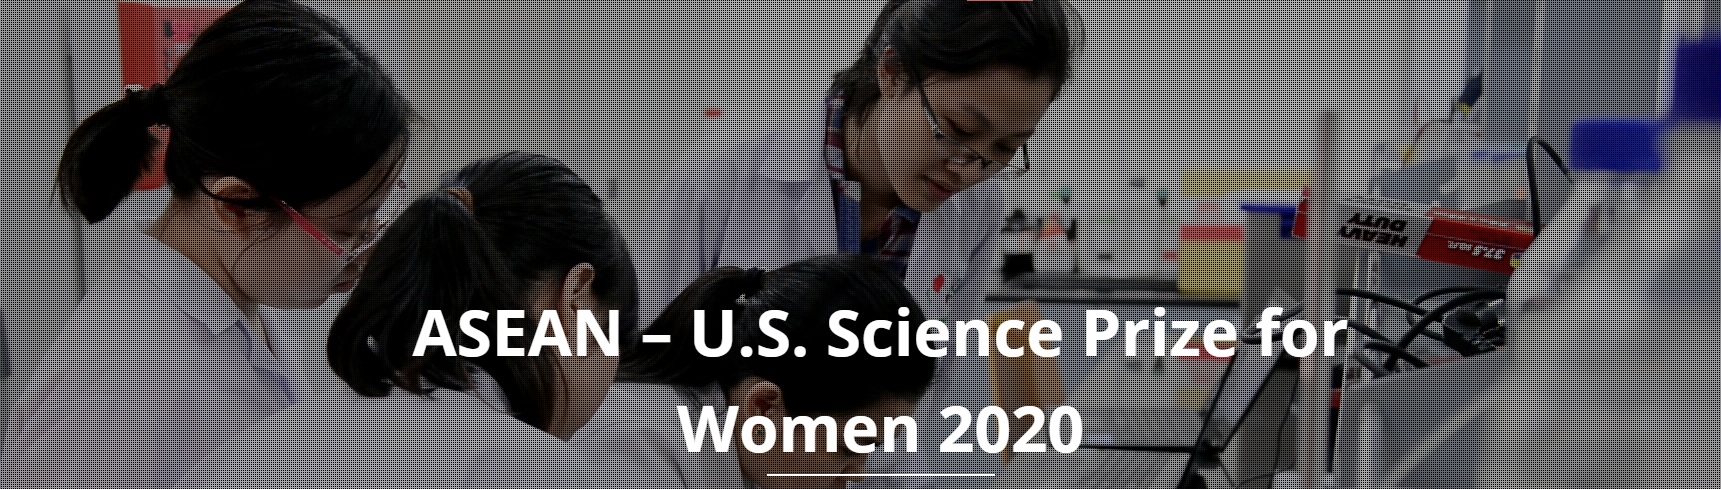 https://scienceprize4women.asean.org/